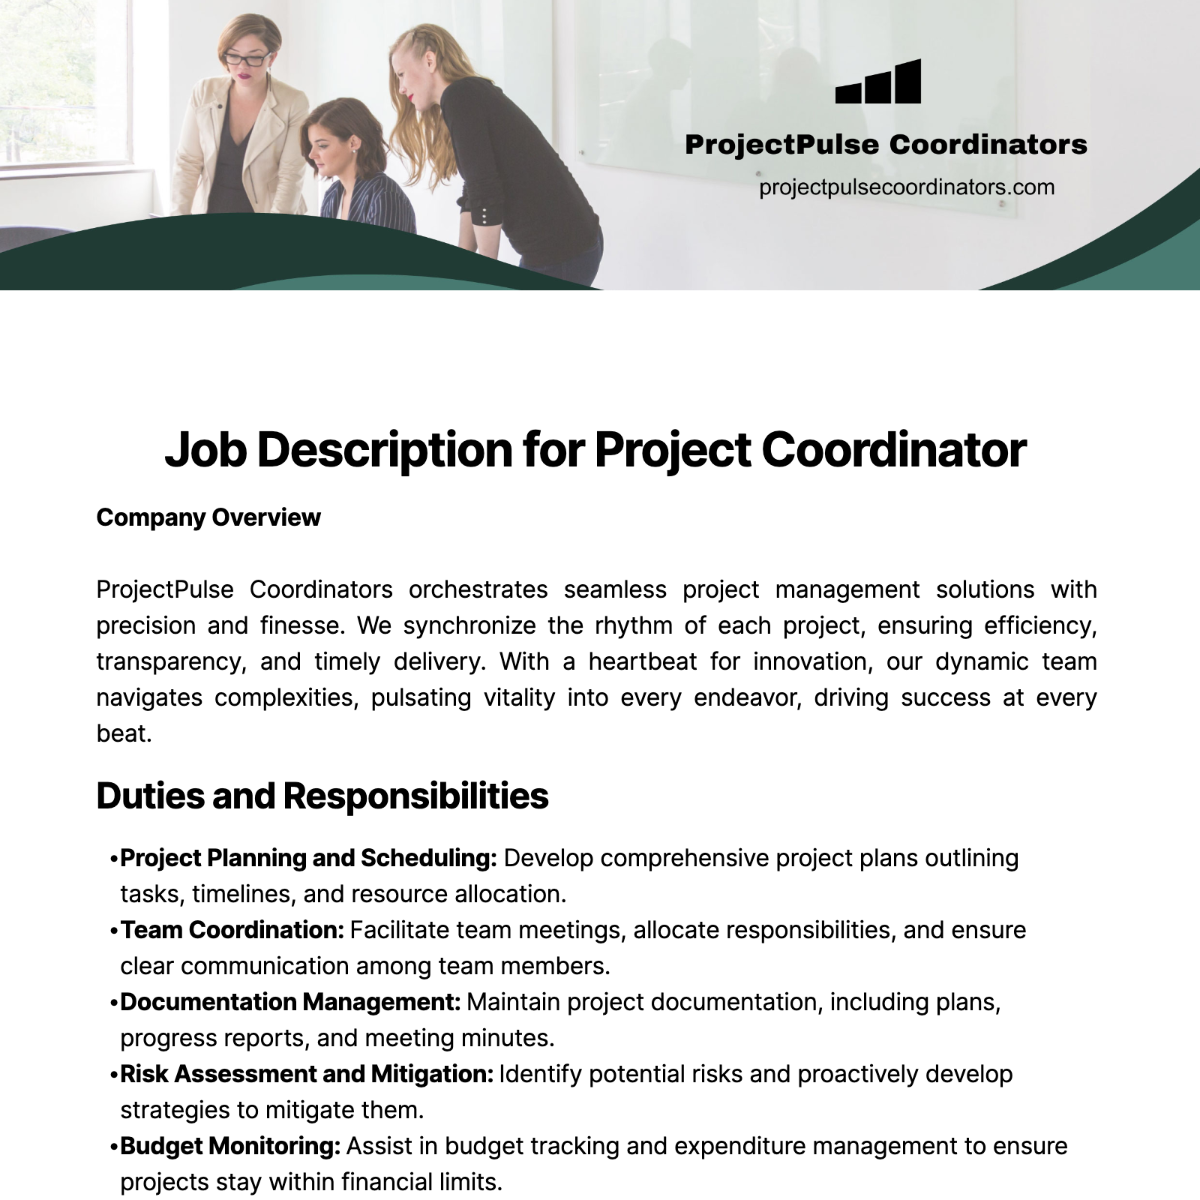 Job Description for Project Coordinator Template